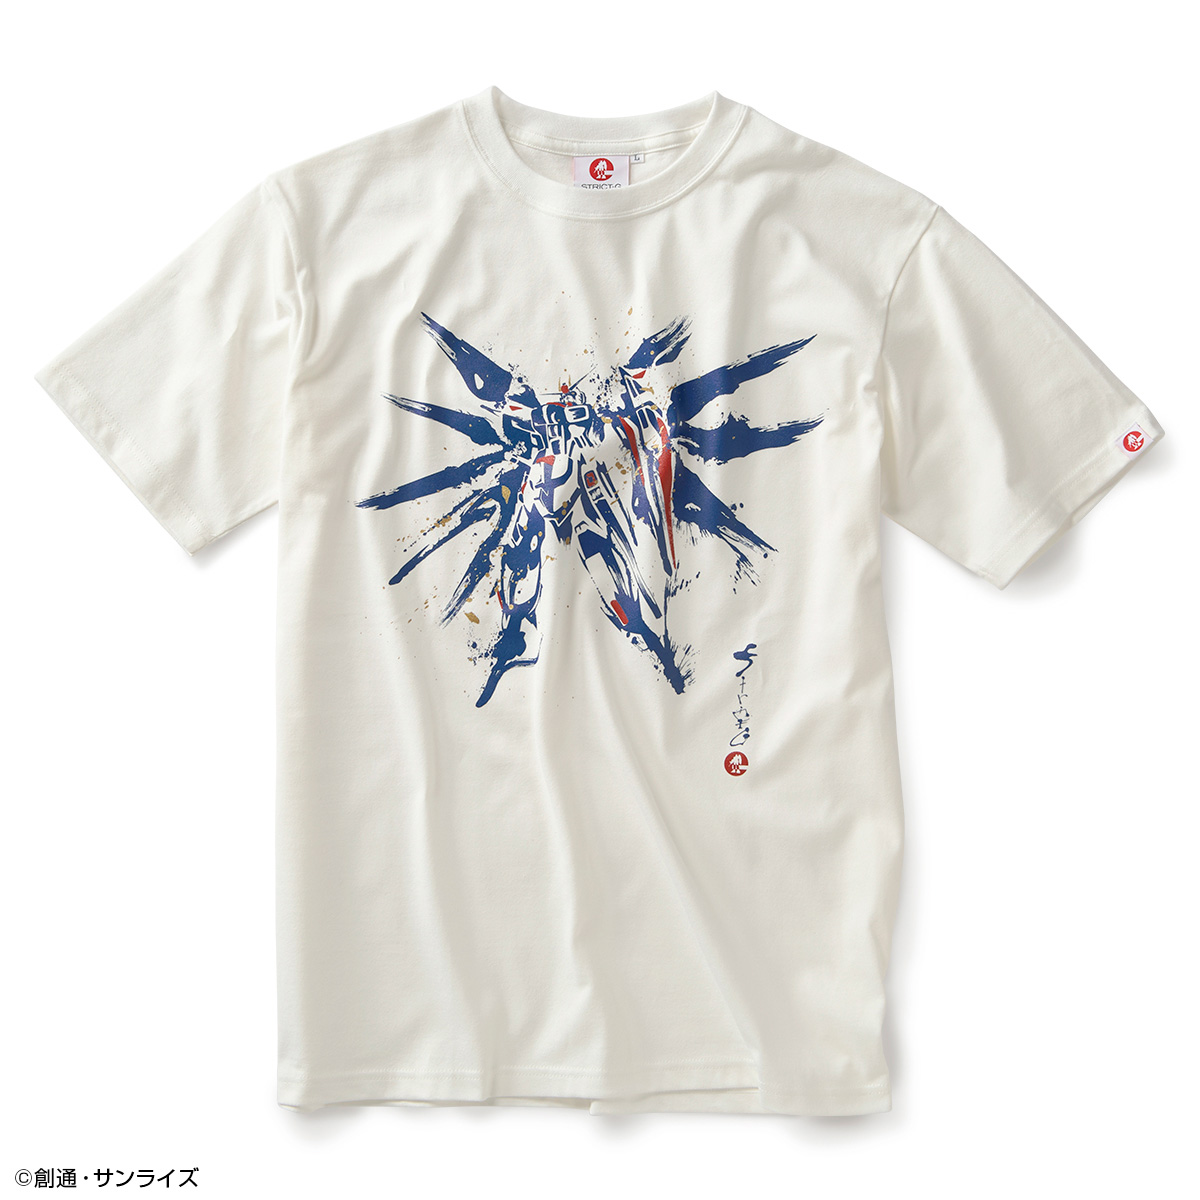 STRICT-G JAPAN『機動戦士ガンダムSEED』Tシャツ 筆絵風フリーダムガンダム柄